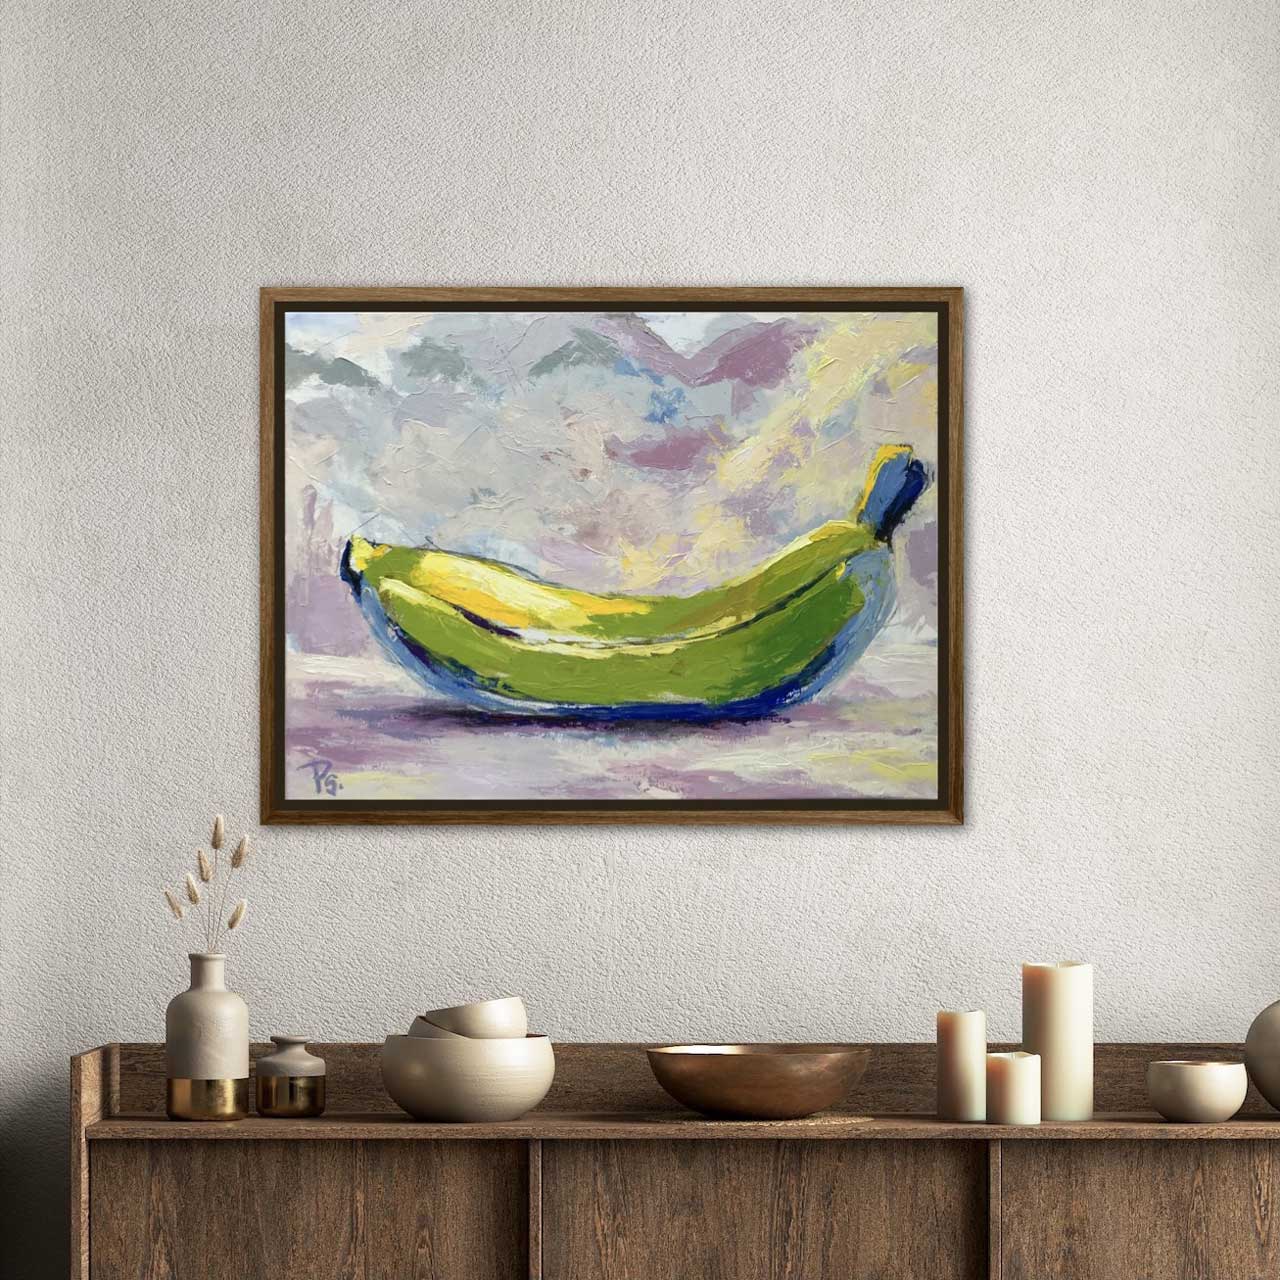 Det er ikke en grøn banan med blå stilk - malet af Peter Simonsen. Akryl og kul på lærred. Format: 80 x 60 cm